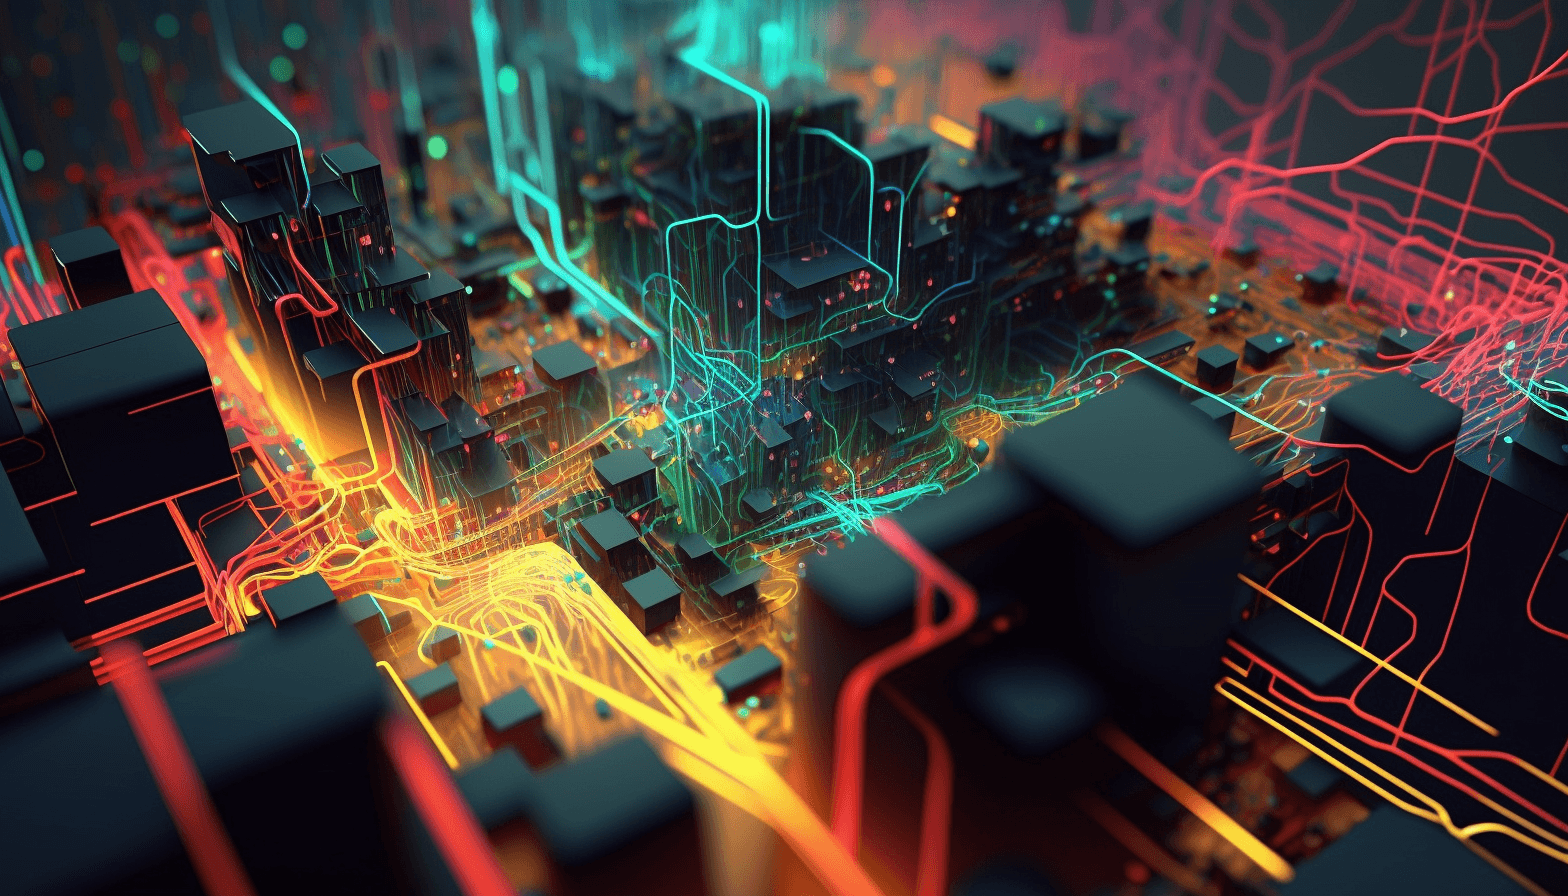 processor that resemble a city